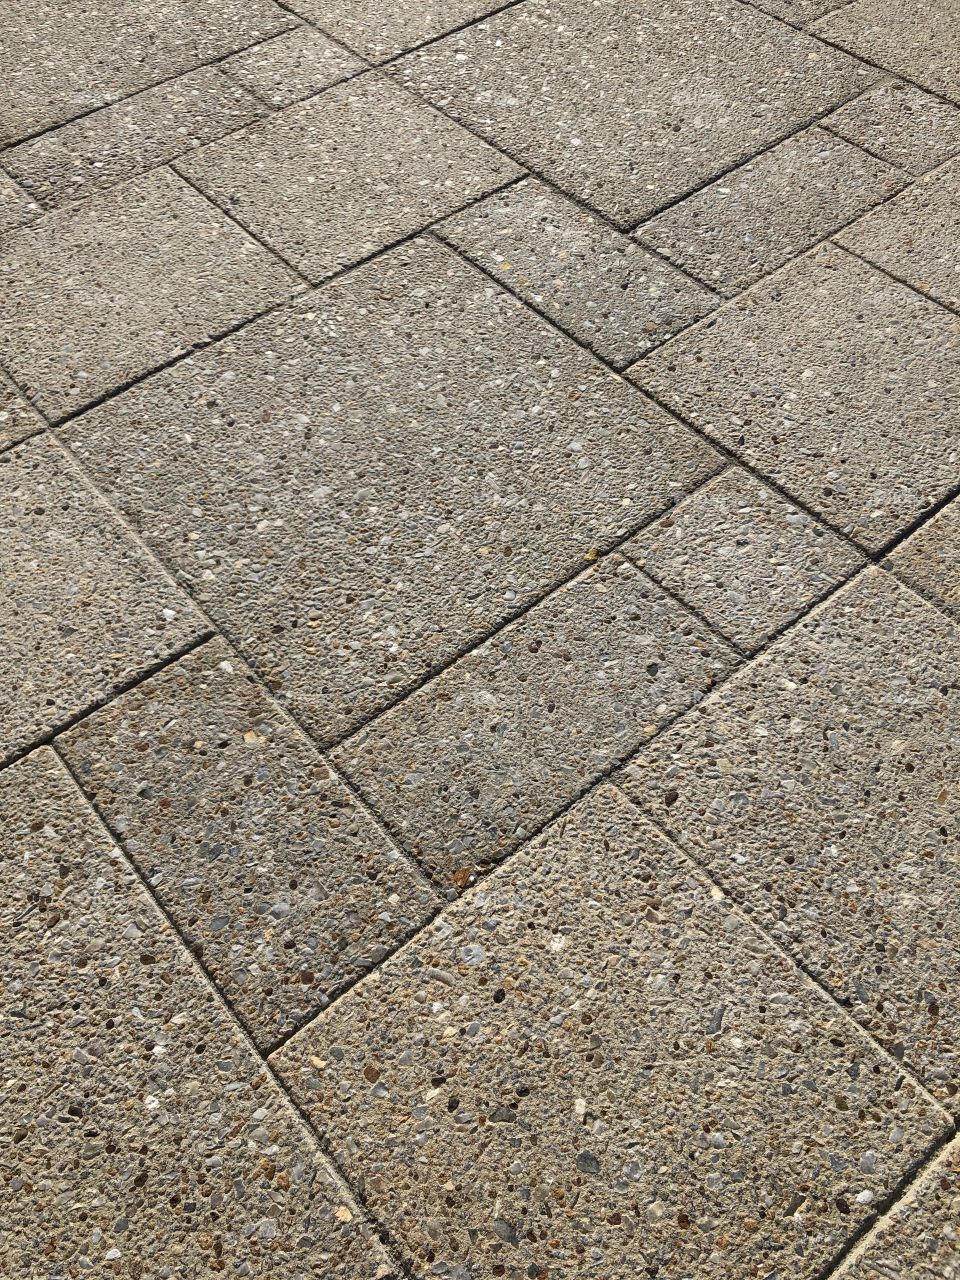 Pattern of the pavement 